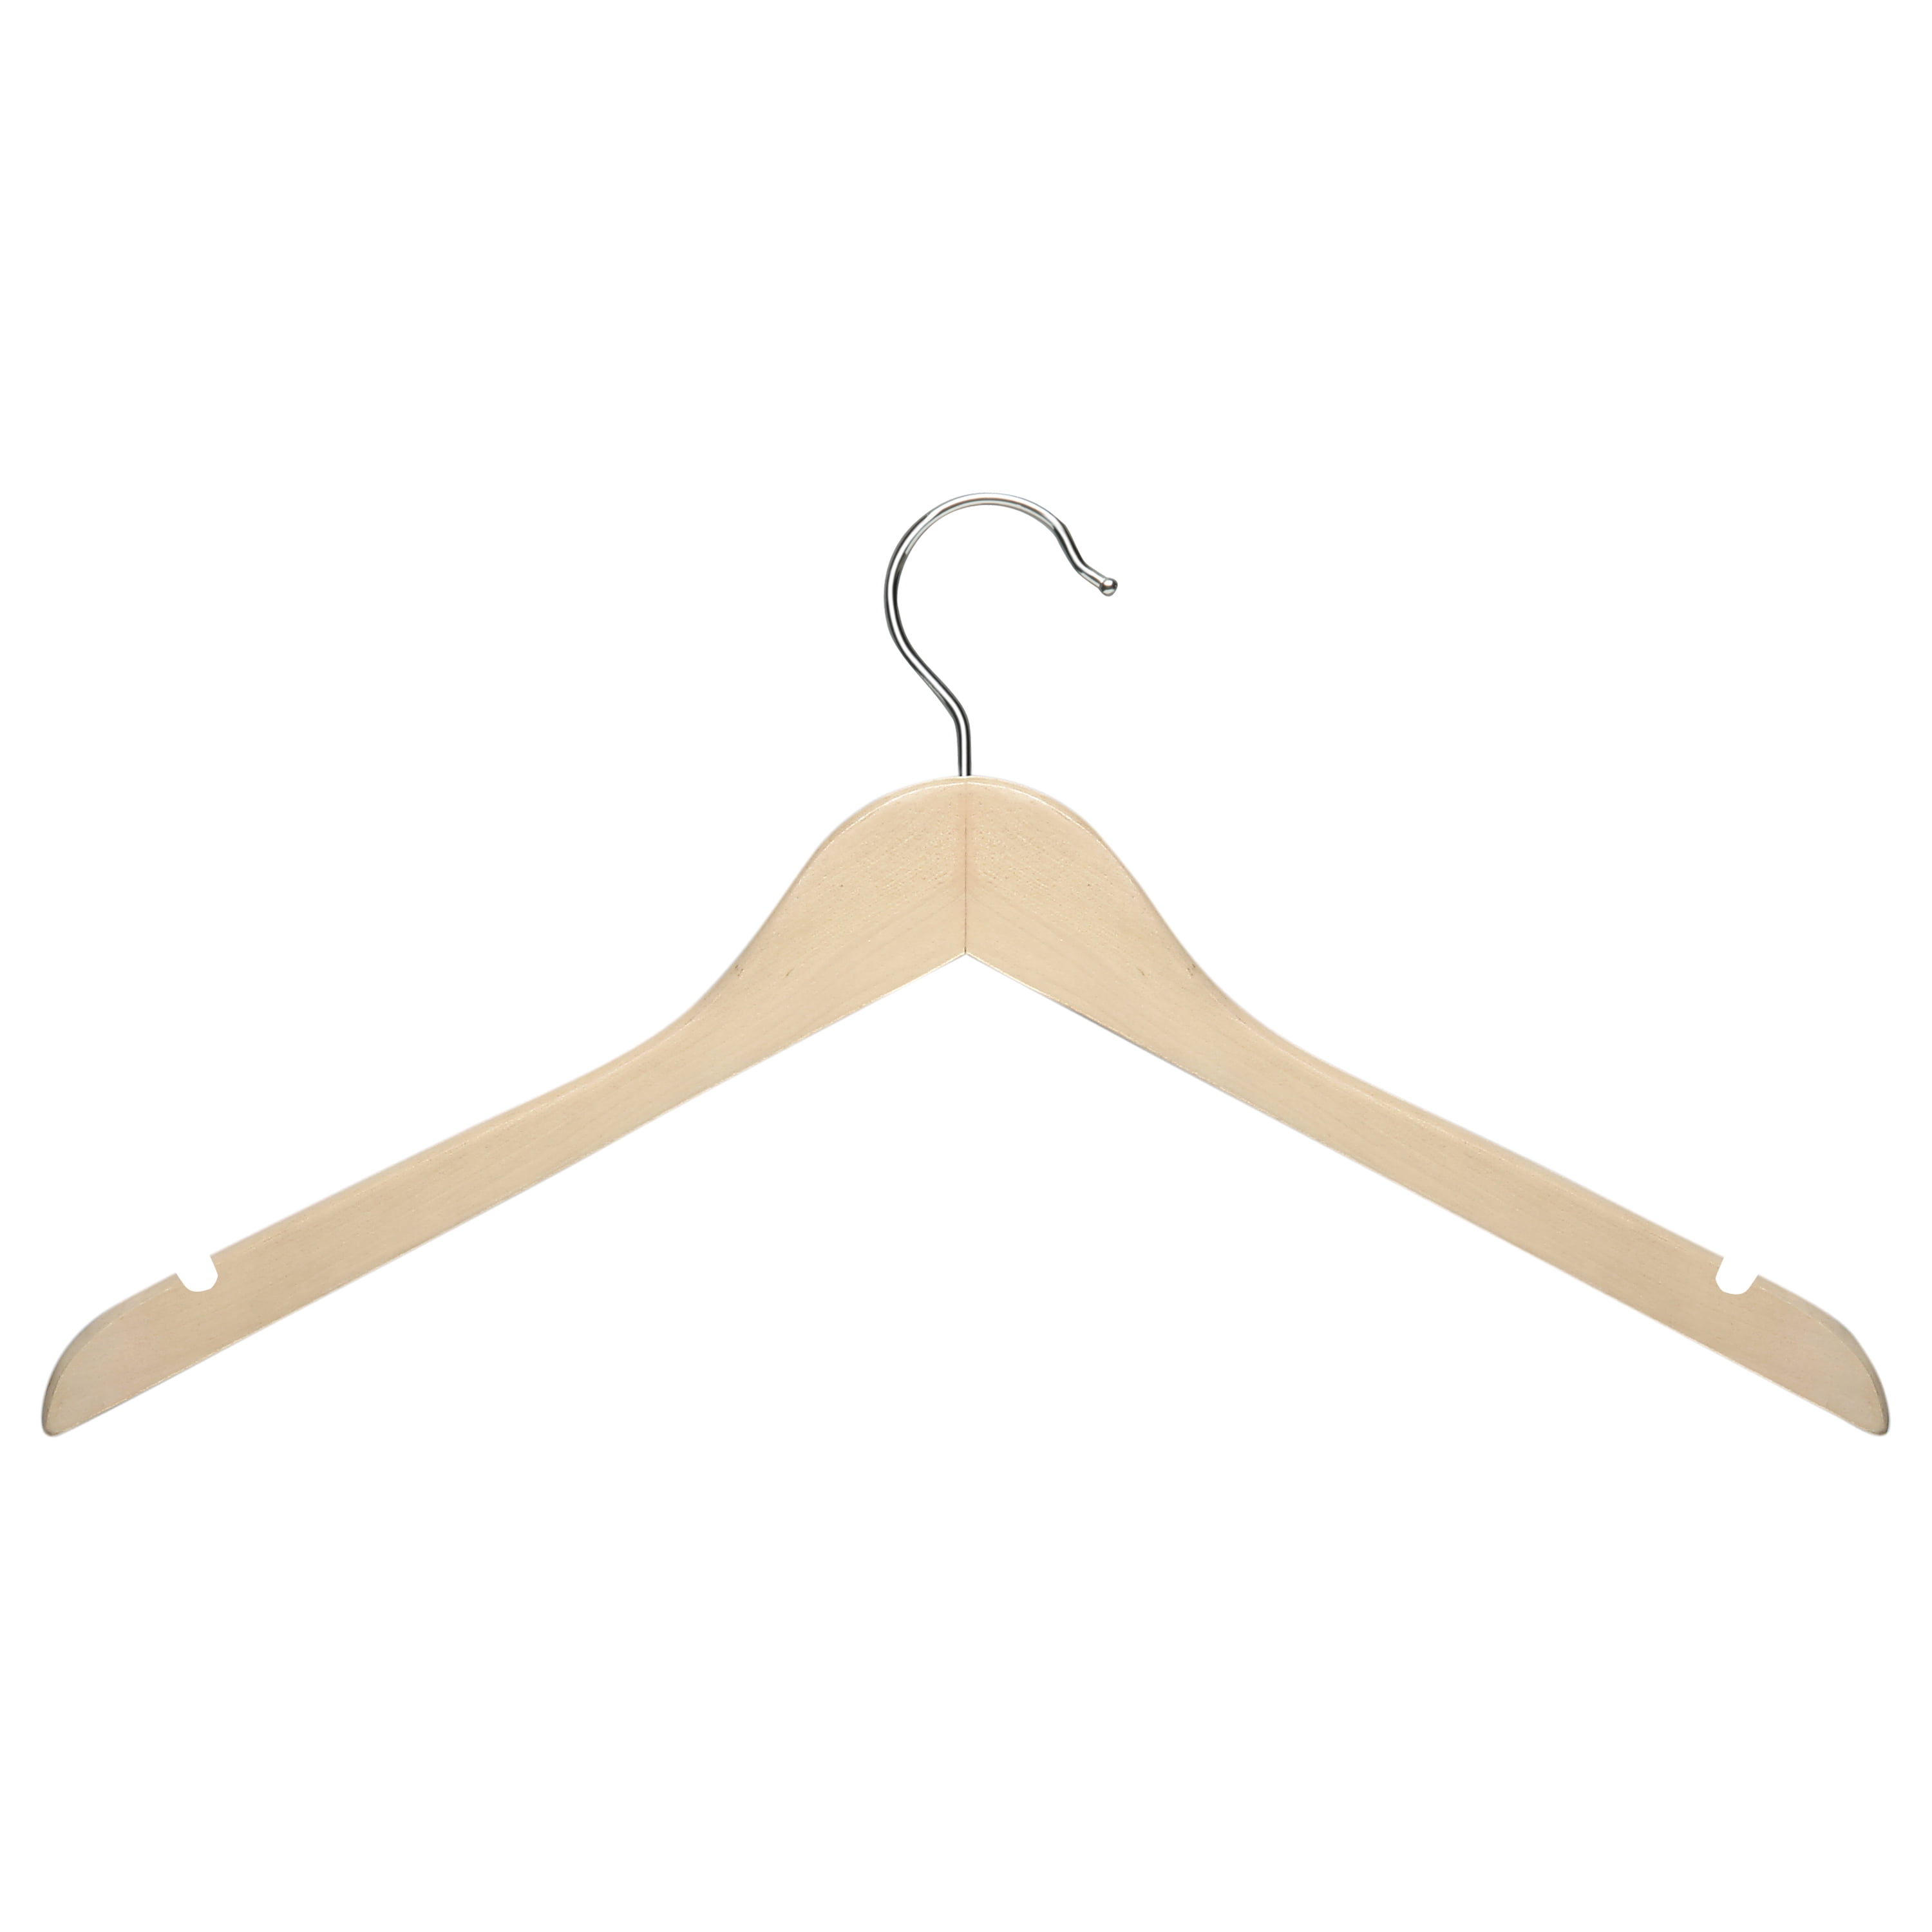 Details about    Maple Wood Clothes Hangers Set For Clothing 4 Pieces wood color 